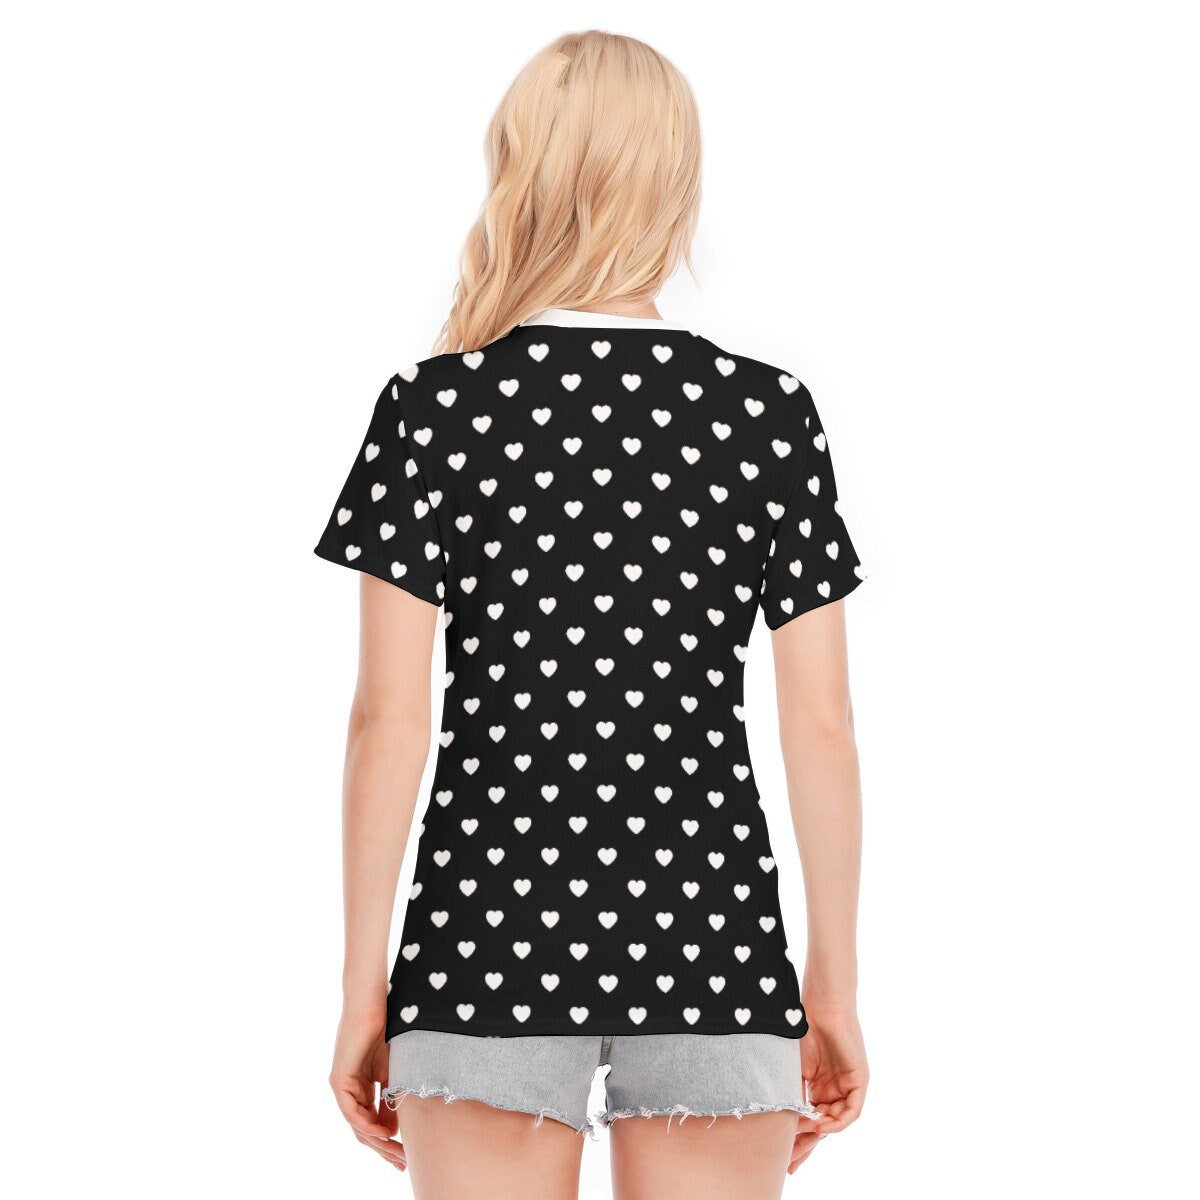 Damen-T-Shirt, Herz-Polka-Dot-Top, Polka-Dot-T-Shirt, schwarzes Polka-Dot-Top, Retro-T-Shirt, Herz-Print-T-Shirt, Herz-Muster-T-Shirt